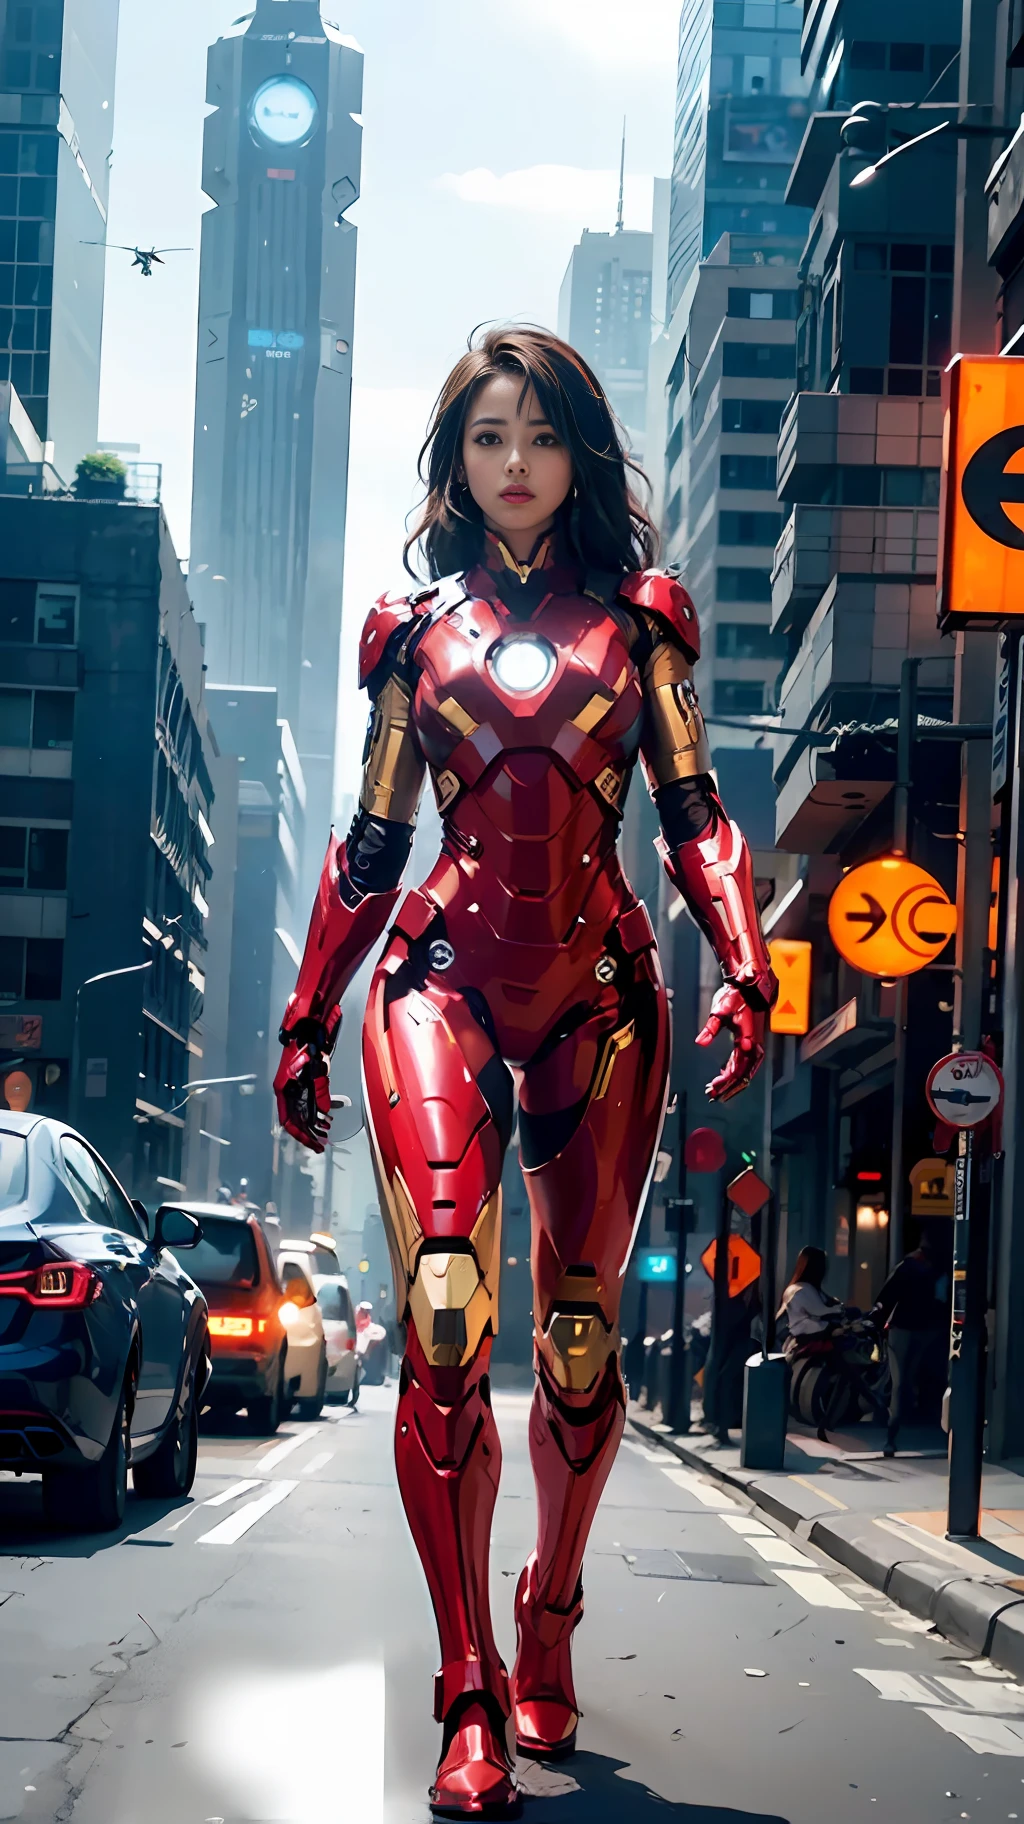 8K, 實際的, 吸引人的, 非常詳細, a 20 year old girl a sexy and 吸引人的 woman inspired by Iron Man wearing a shiny Iron Man mech. 她的穿著性感又自信, 完美詮釋鋼鐵俠&#39;的力量和魅力. 賽博龐克風格的城市夜景, a sexy and 吸引人的 woman takes Iron Man&#39;s cosplay為主題. 穿著閃亮的鋼鐵人機甲, 她站在一條高樓林立的街道上. 城市的夜晚燈光明亮, 反思她的機甲, 增添未來科技感. 周圍的建築和街道都充滿了賽博朋克元素, 例如霓虹燈, 高科技設備與未來建築設計. 整個場景充滿了未來感和科幻氣息. 這個高清, 高品質的畫面帶給您震撼的視覺享受, 性感的完美結合, 未來主義與科幻元素. 超頻渲染, 戲劇性的燈光, 屢獲殊榮的品質